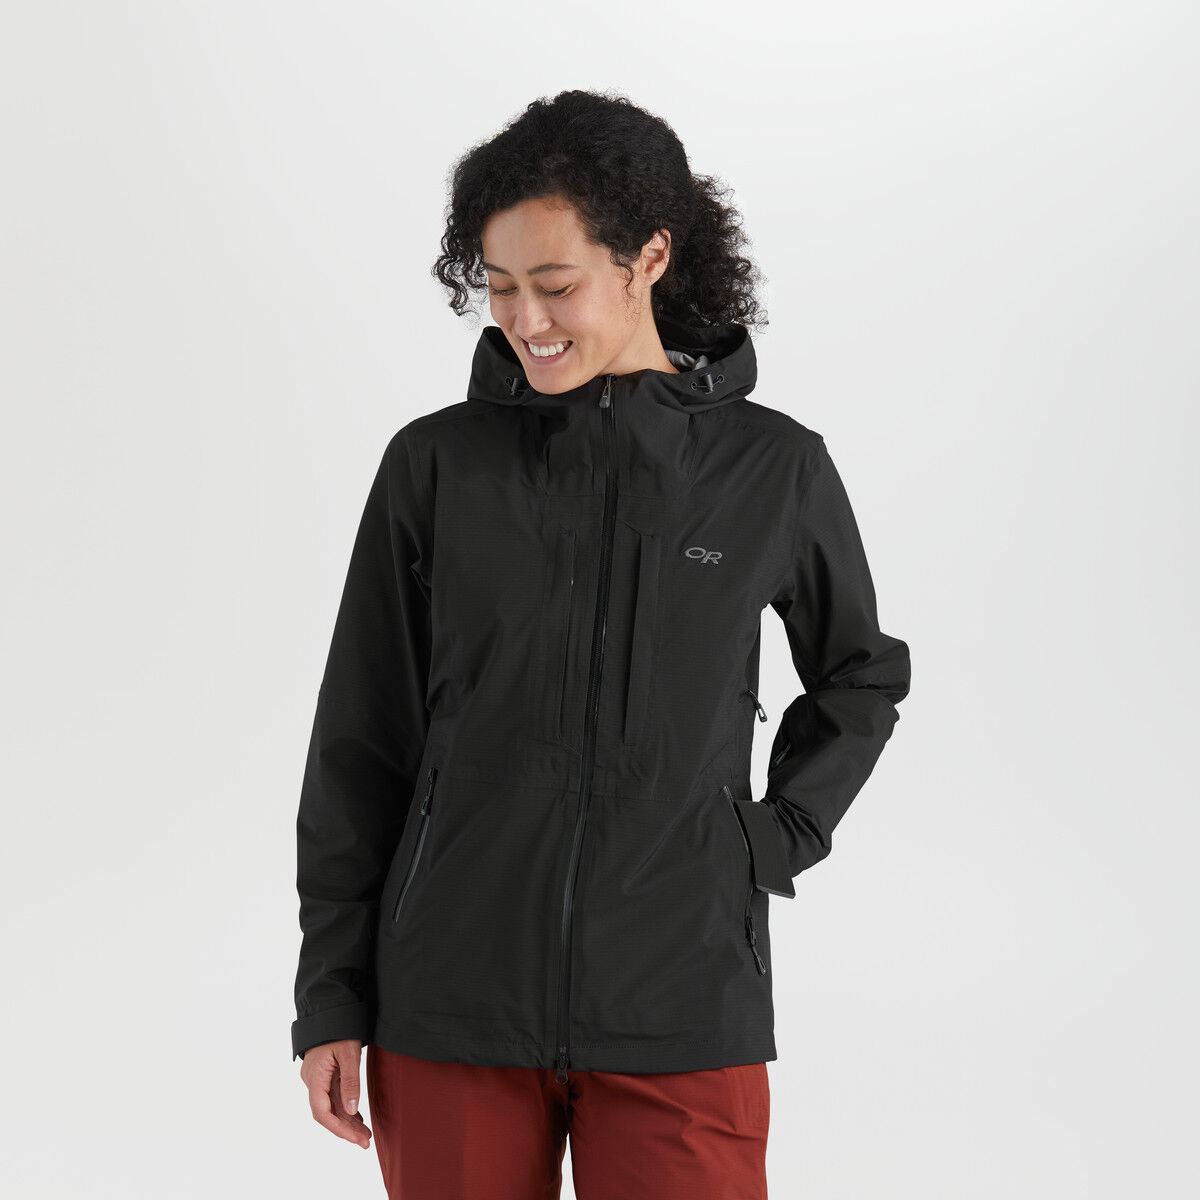 Outdoor Research Carbide Jacket - Ski jacket - Women's